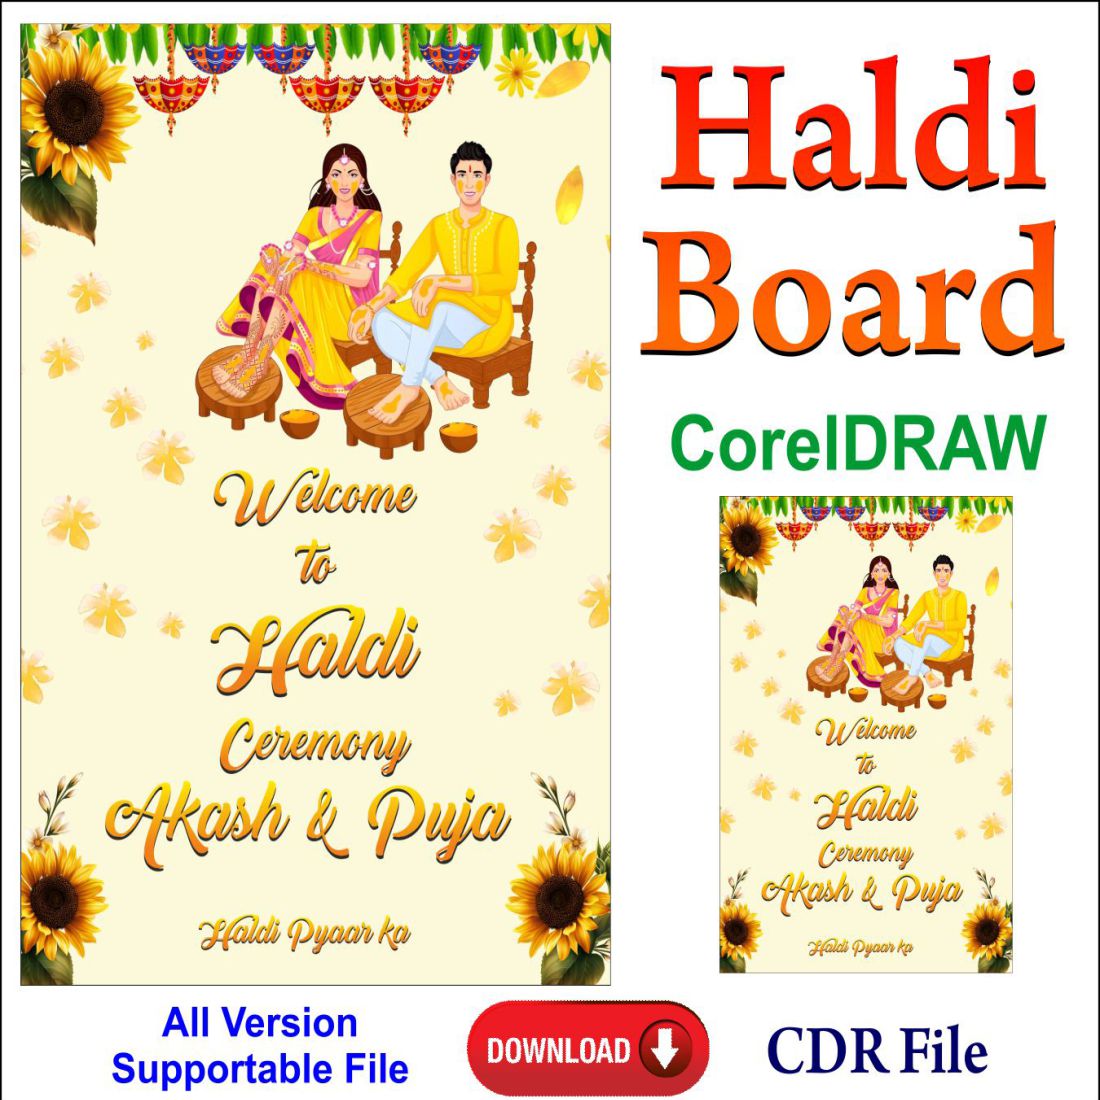 Wedding Haldi Board Design CDR 12 File Poster preview image.